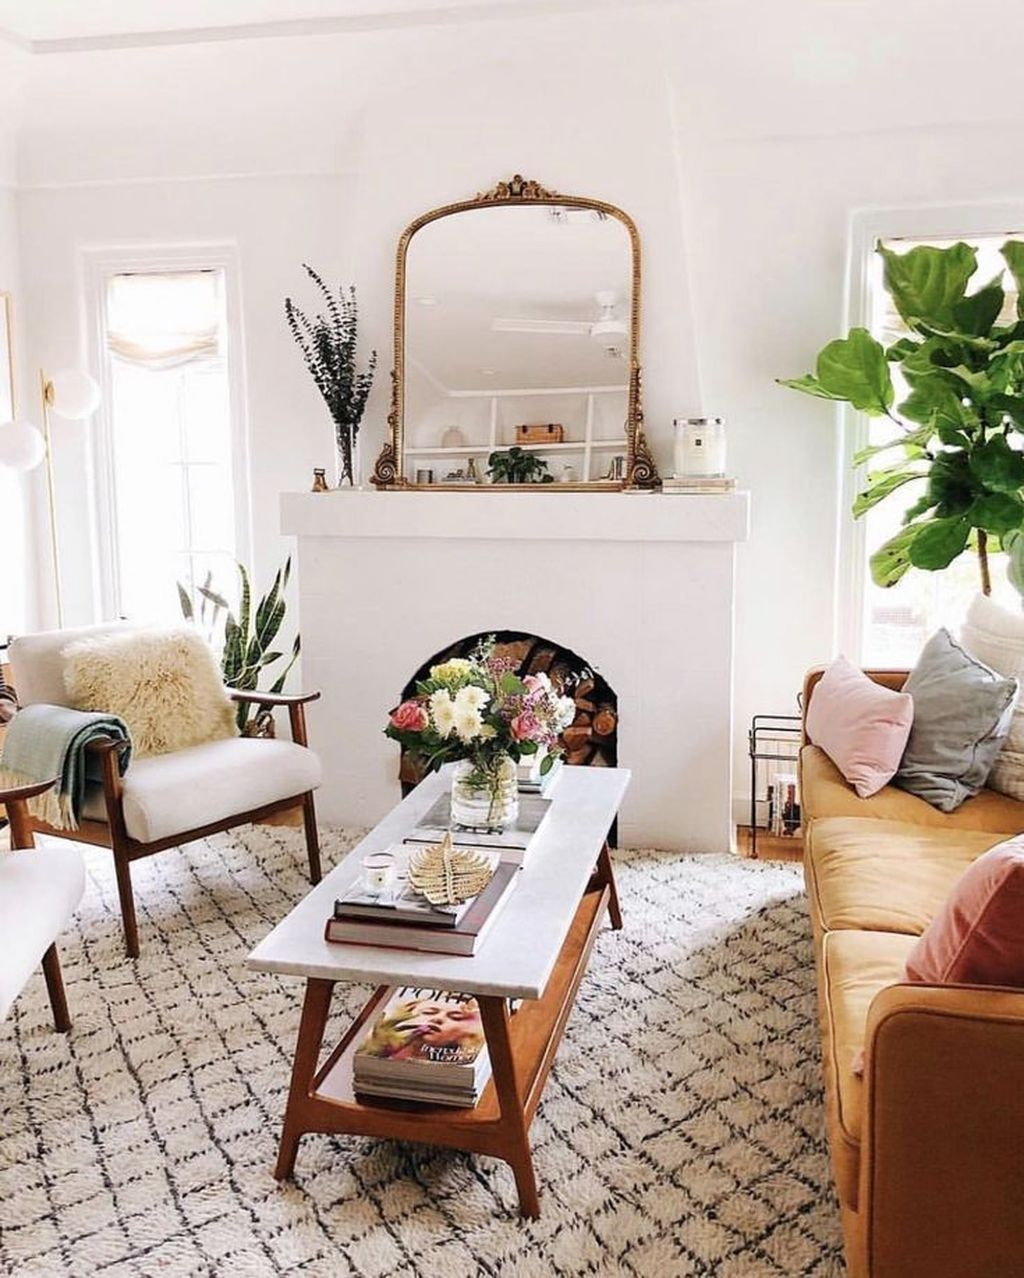 Inspiring Living Room Decorating Ideas06 – HOMISHOME